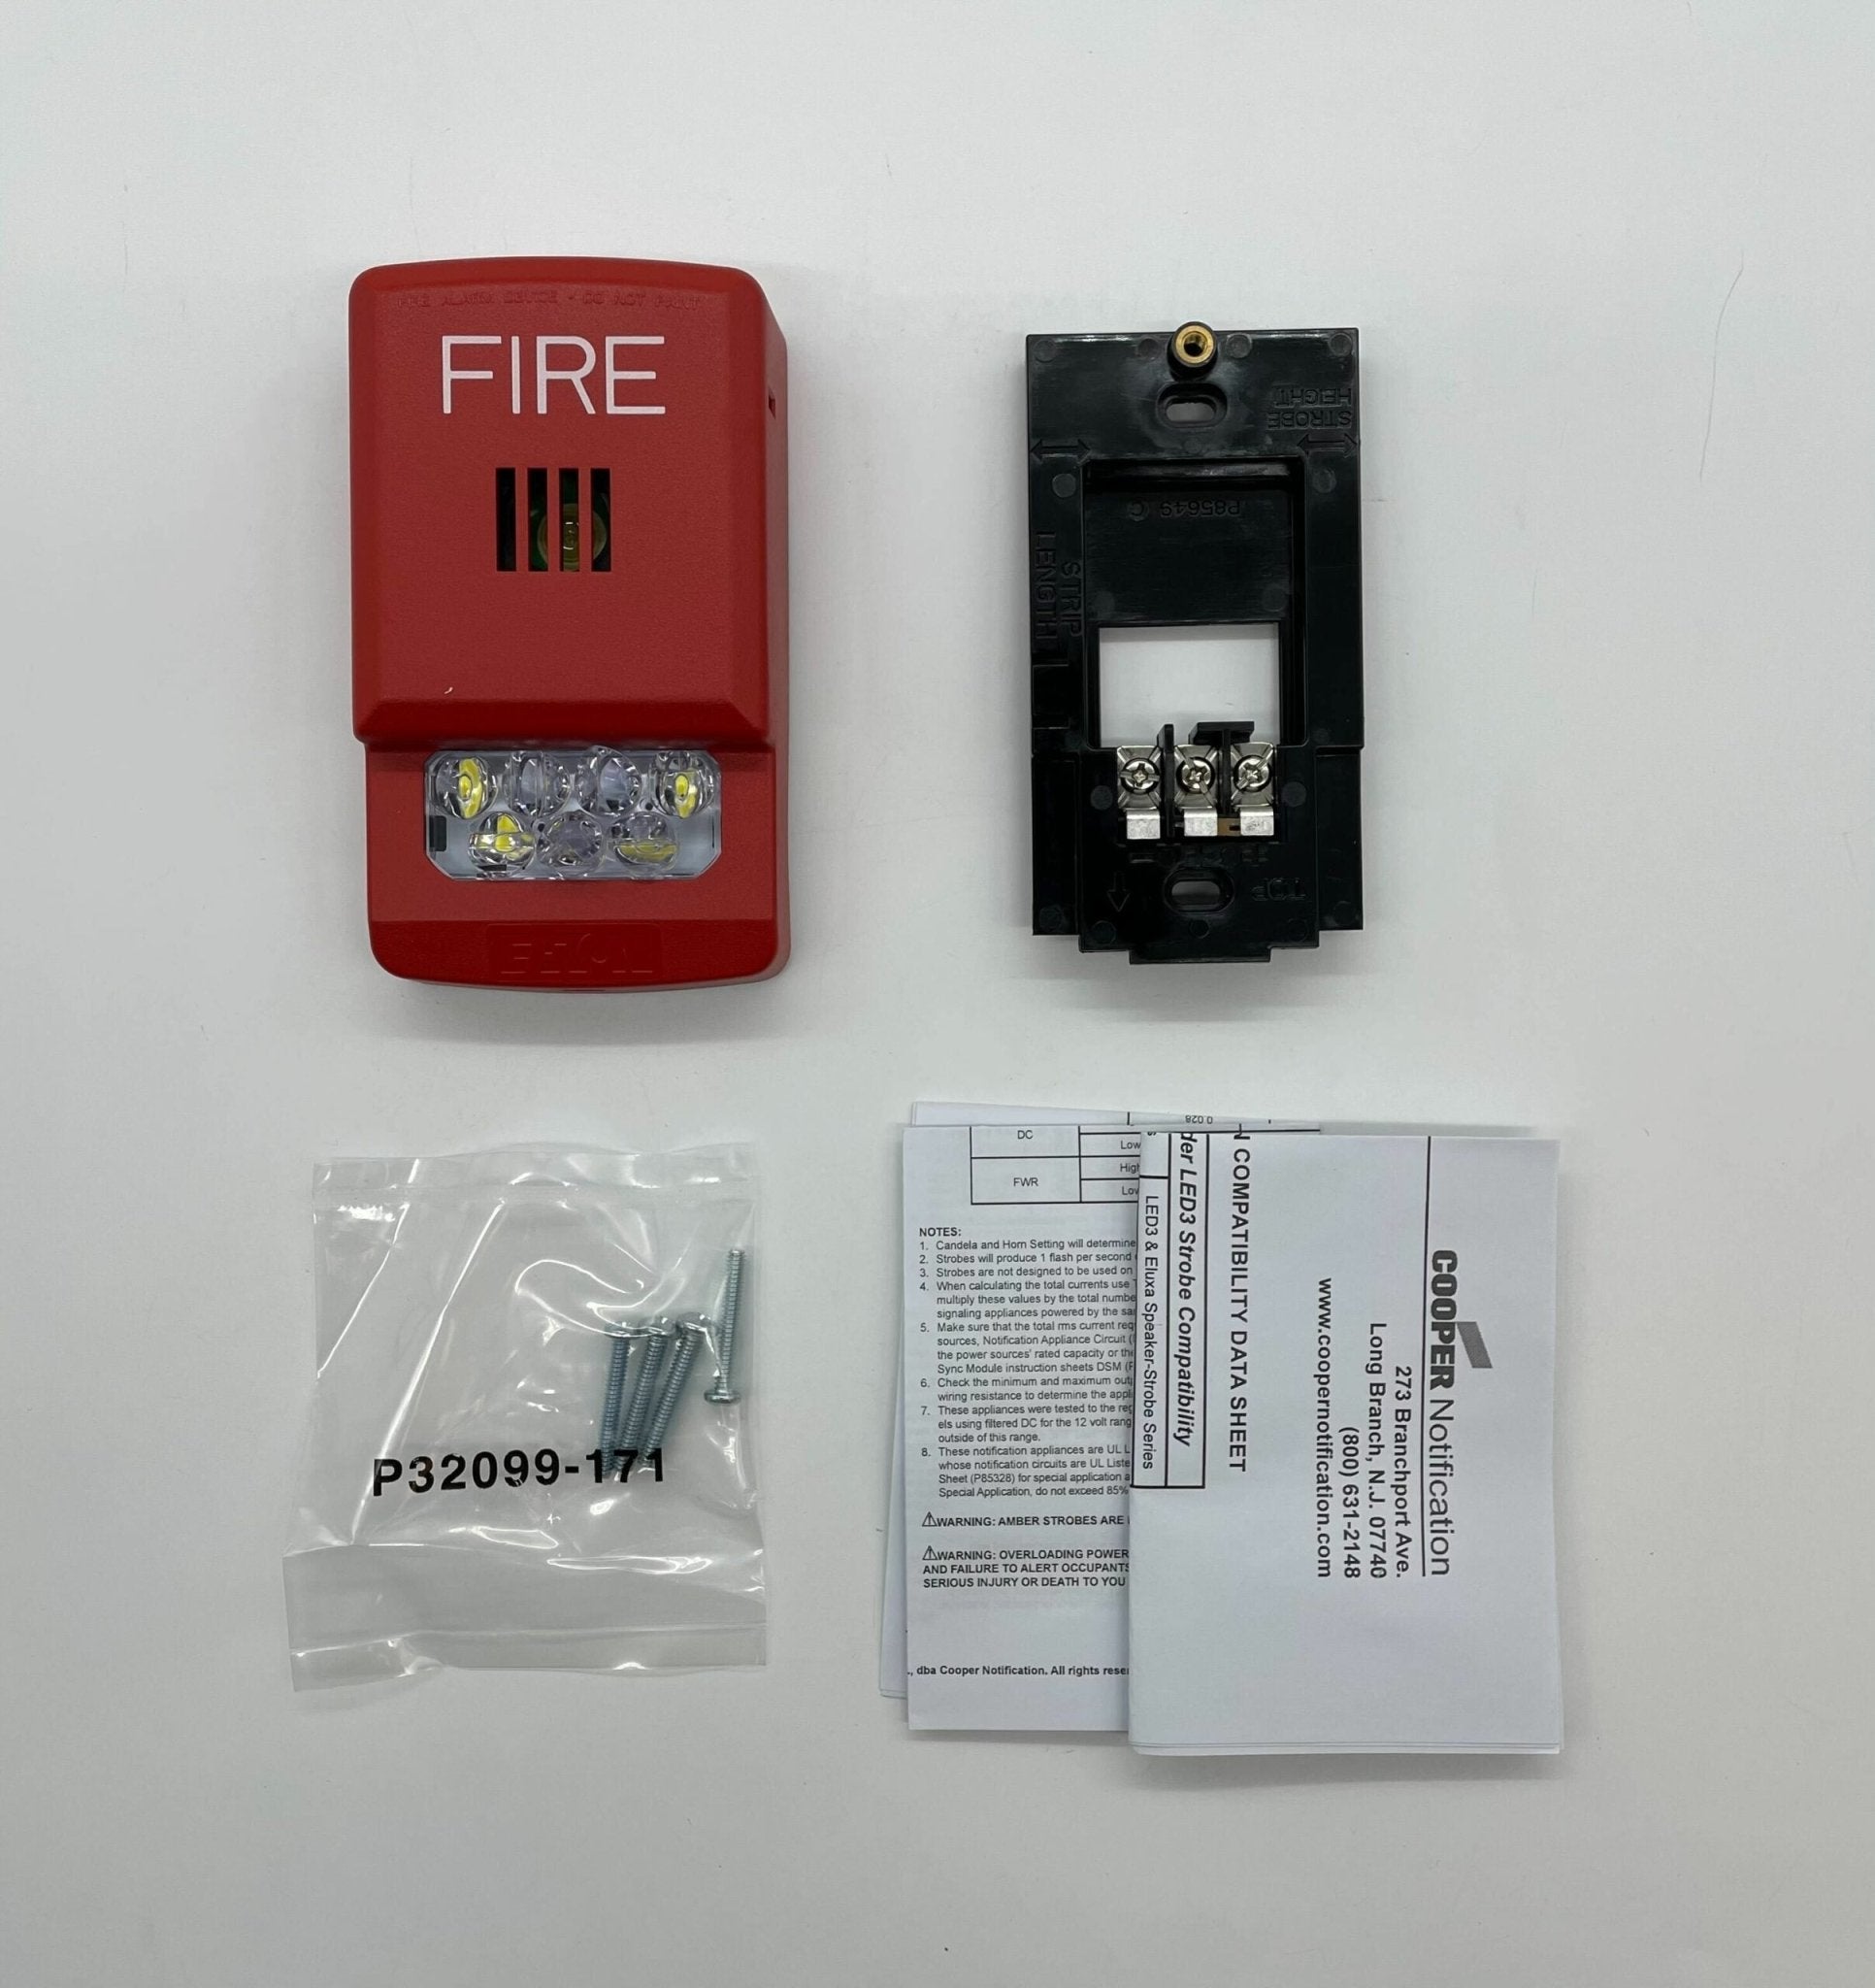 Wheelock ELHSR - The Fire Alarm Supplier